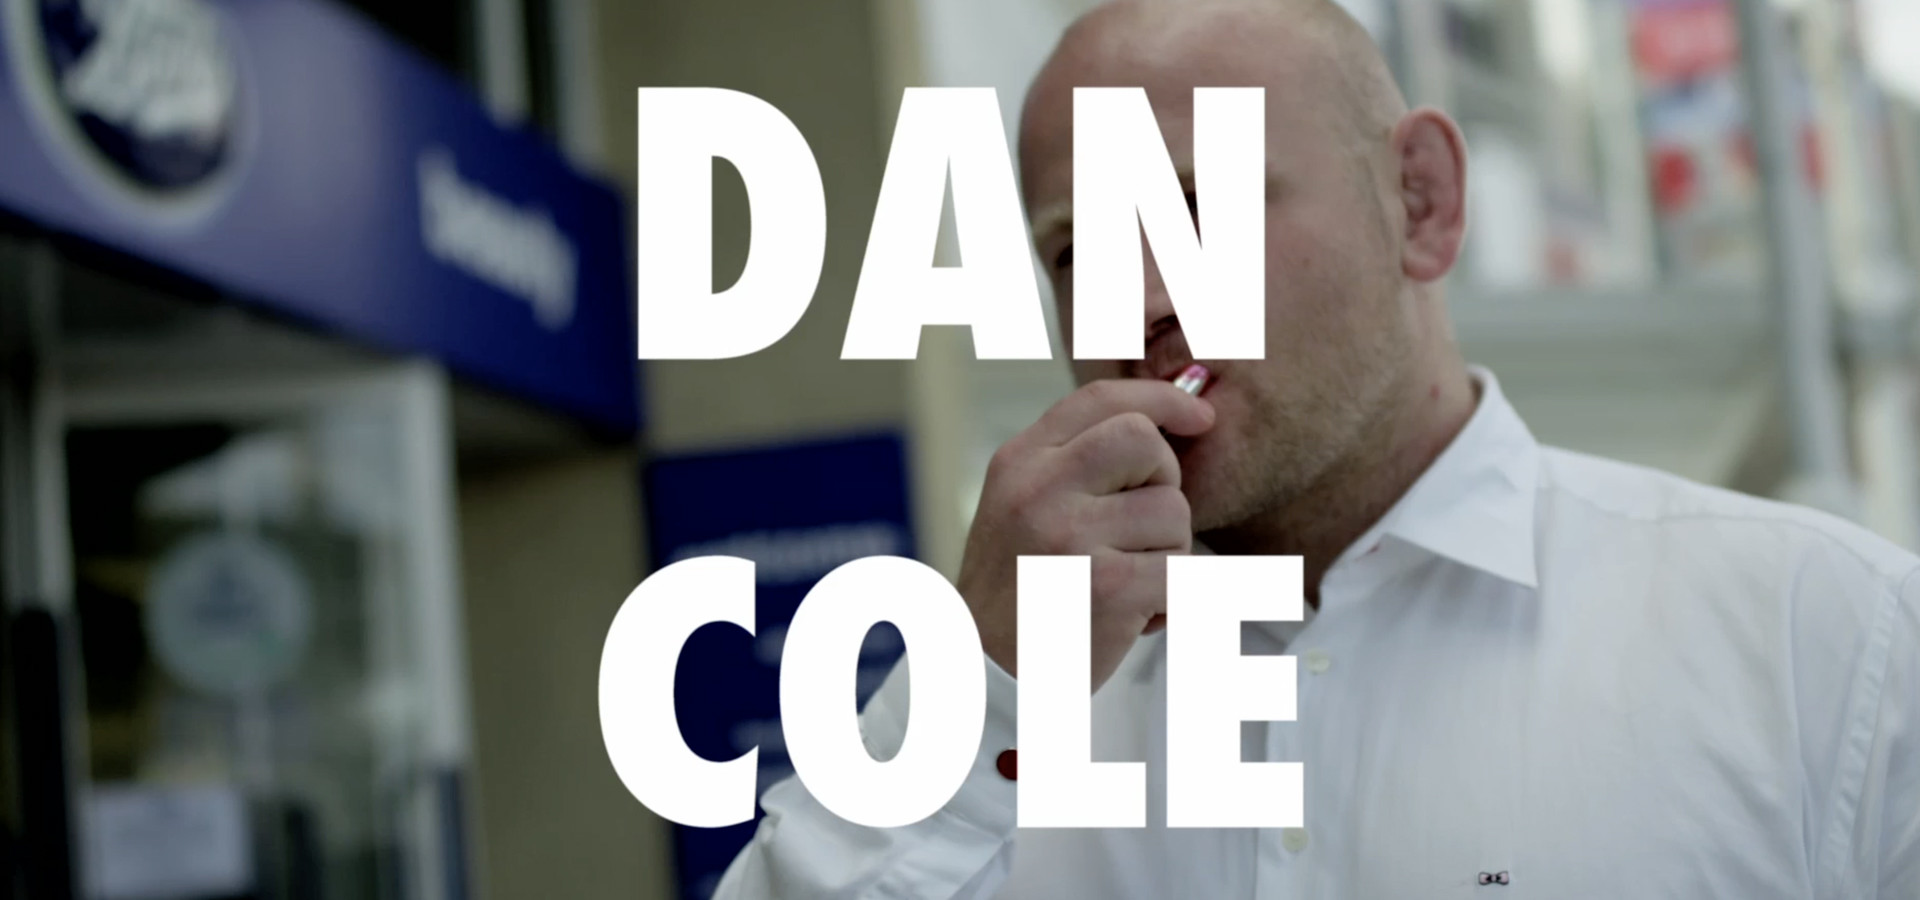 Give Blood - Dan Cole